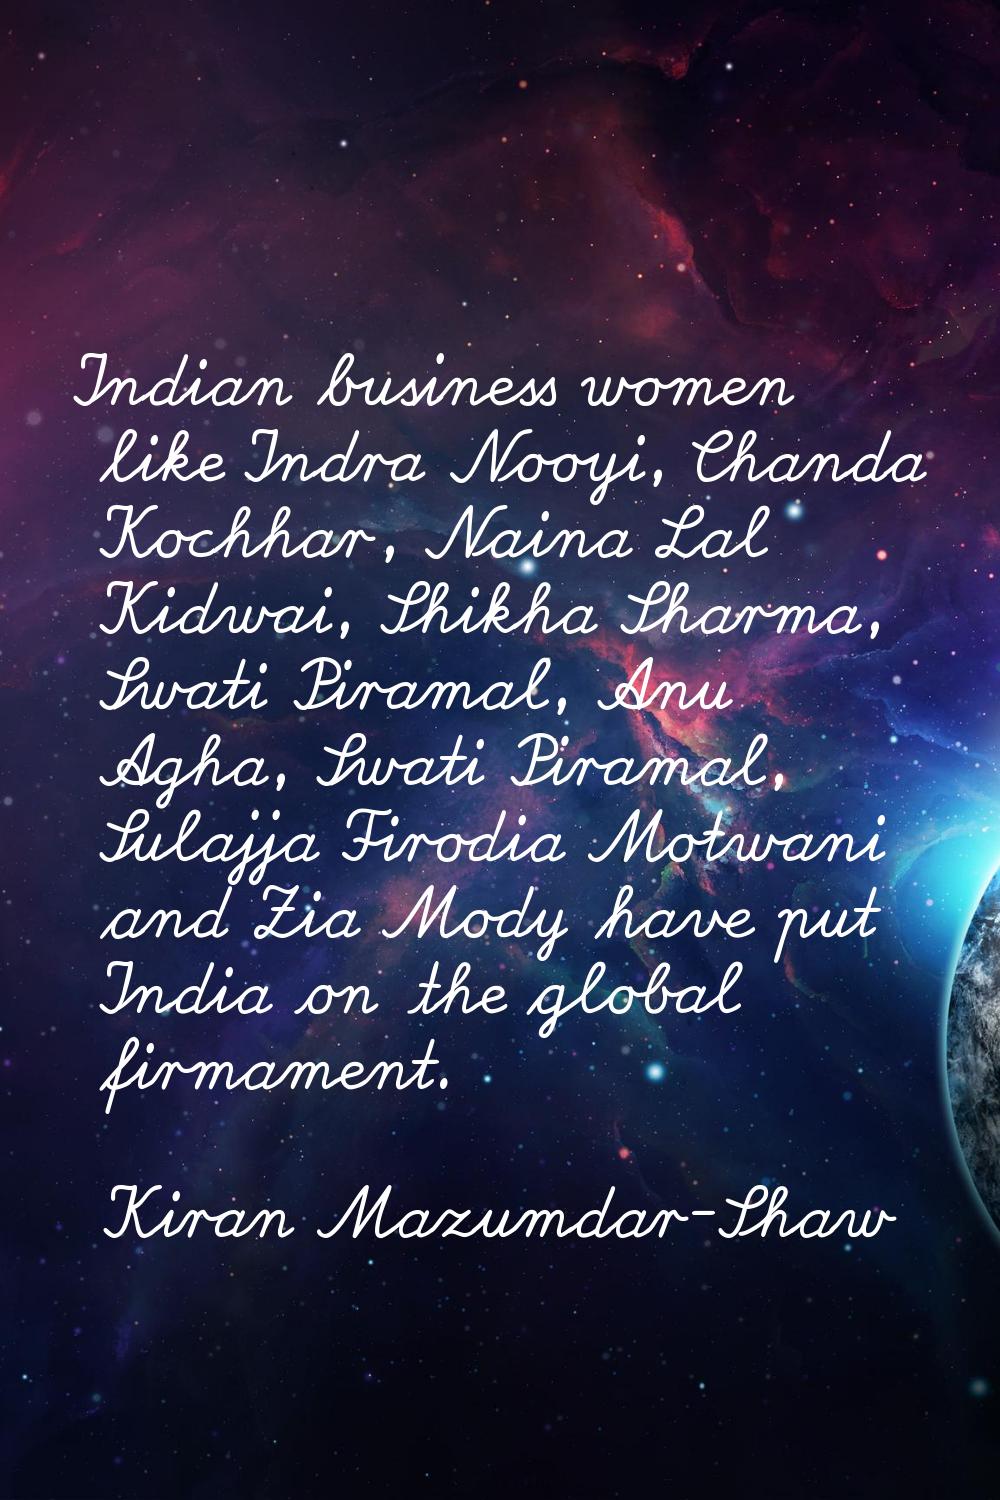 Indian business women like Indra Nooyi, Chanda Kochhar, Naina Lal Kidwai, Shikha Sharma, Swati Pira